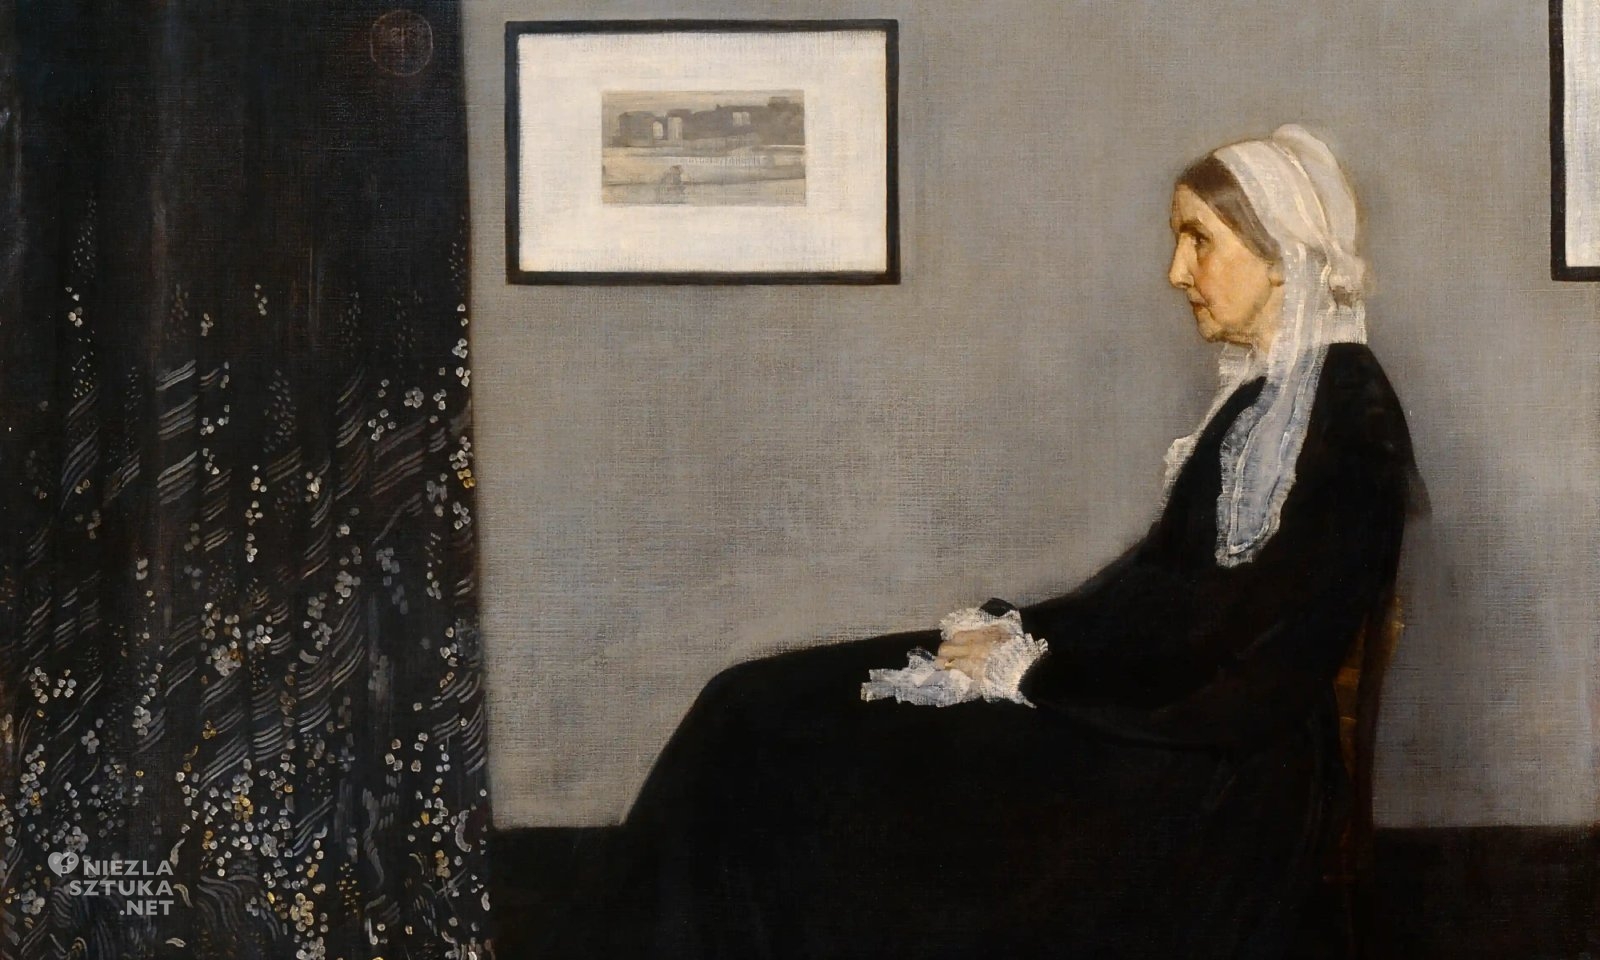 James Abbott McNeill Whistler, Matka Whistlera, Musée d’Orsay, Niezła sztuka